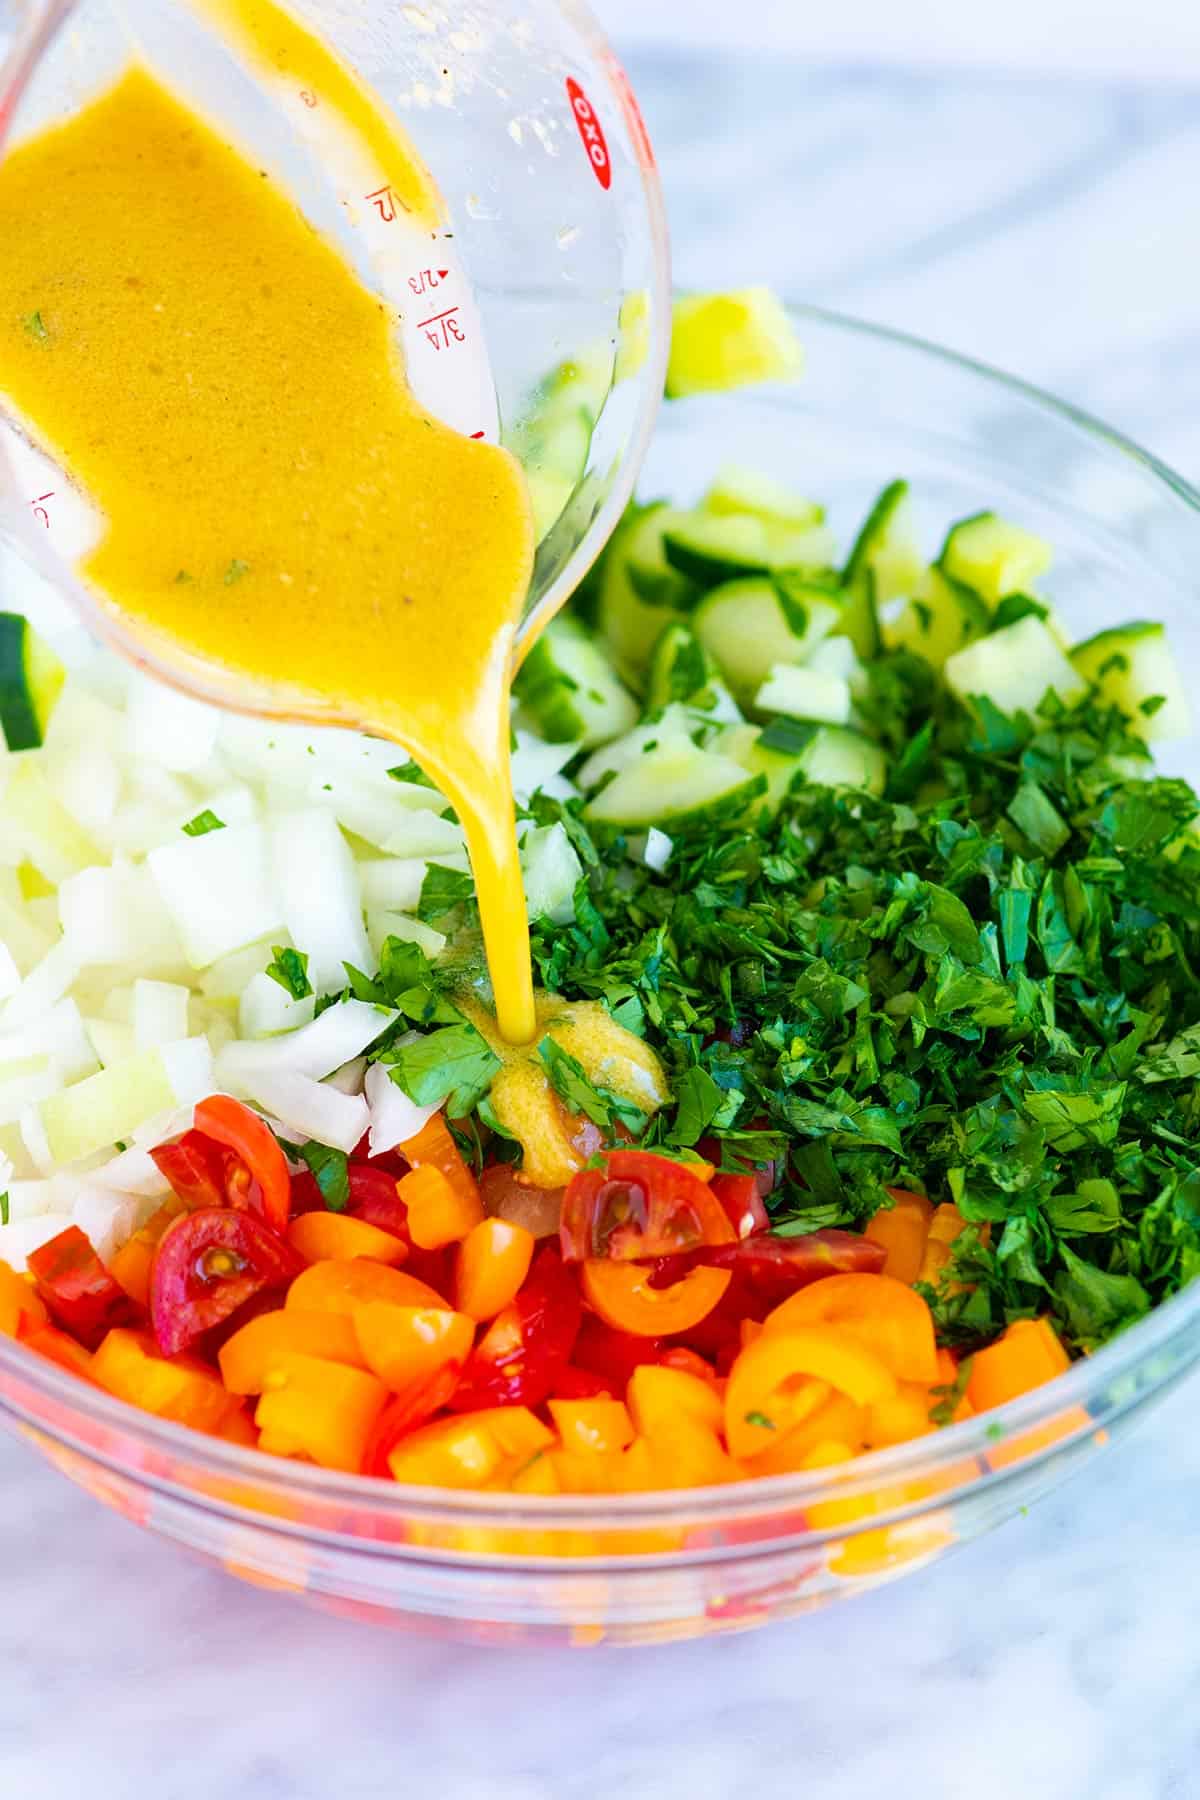 Best Tomato Salad Recipe - How To Make Tomato Salad